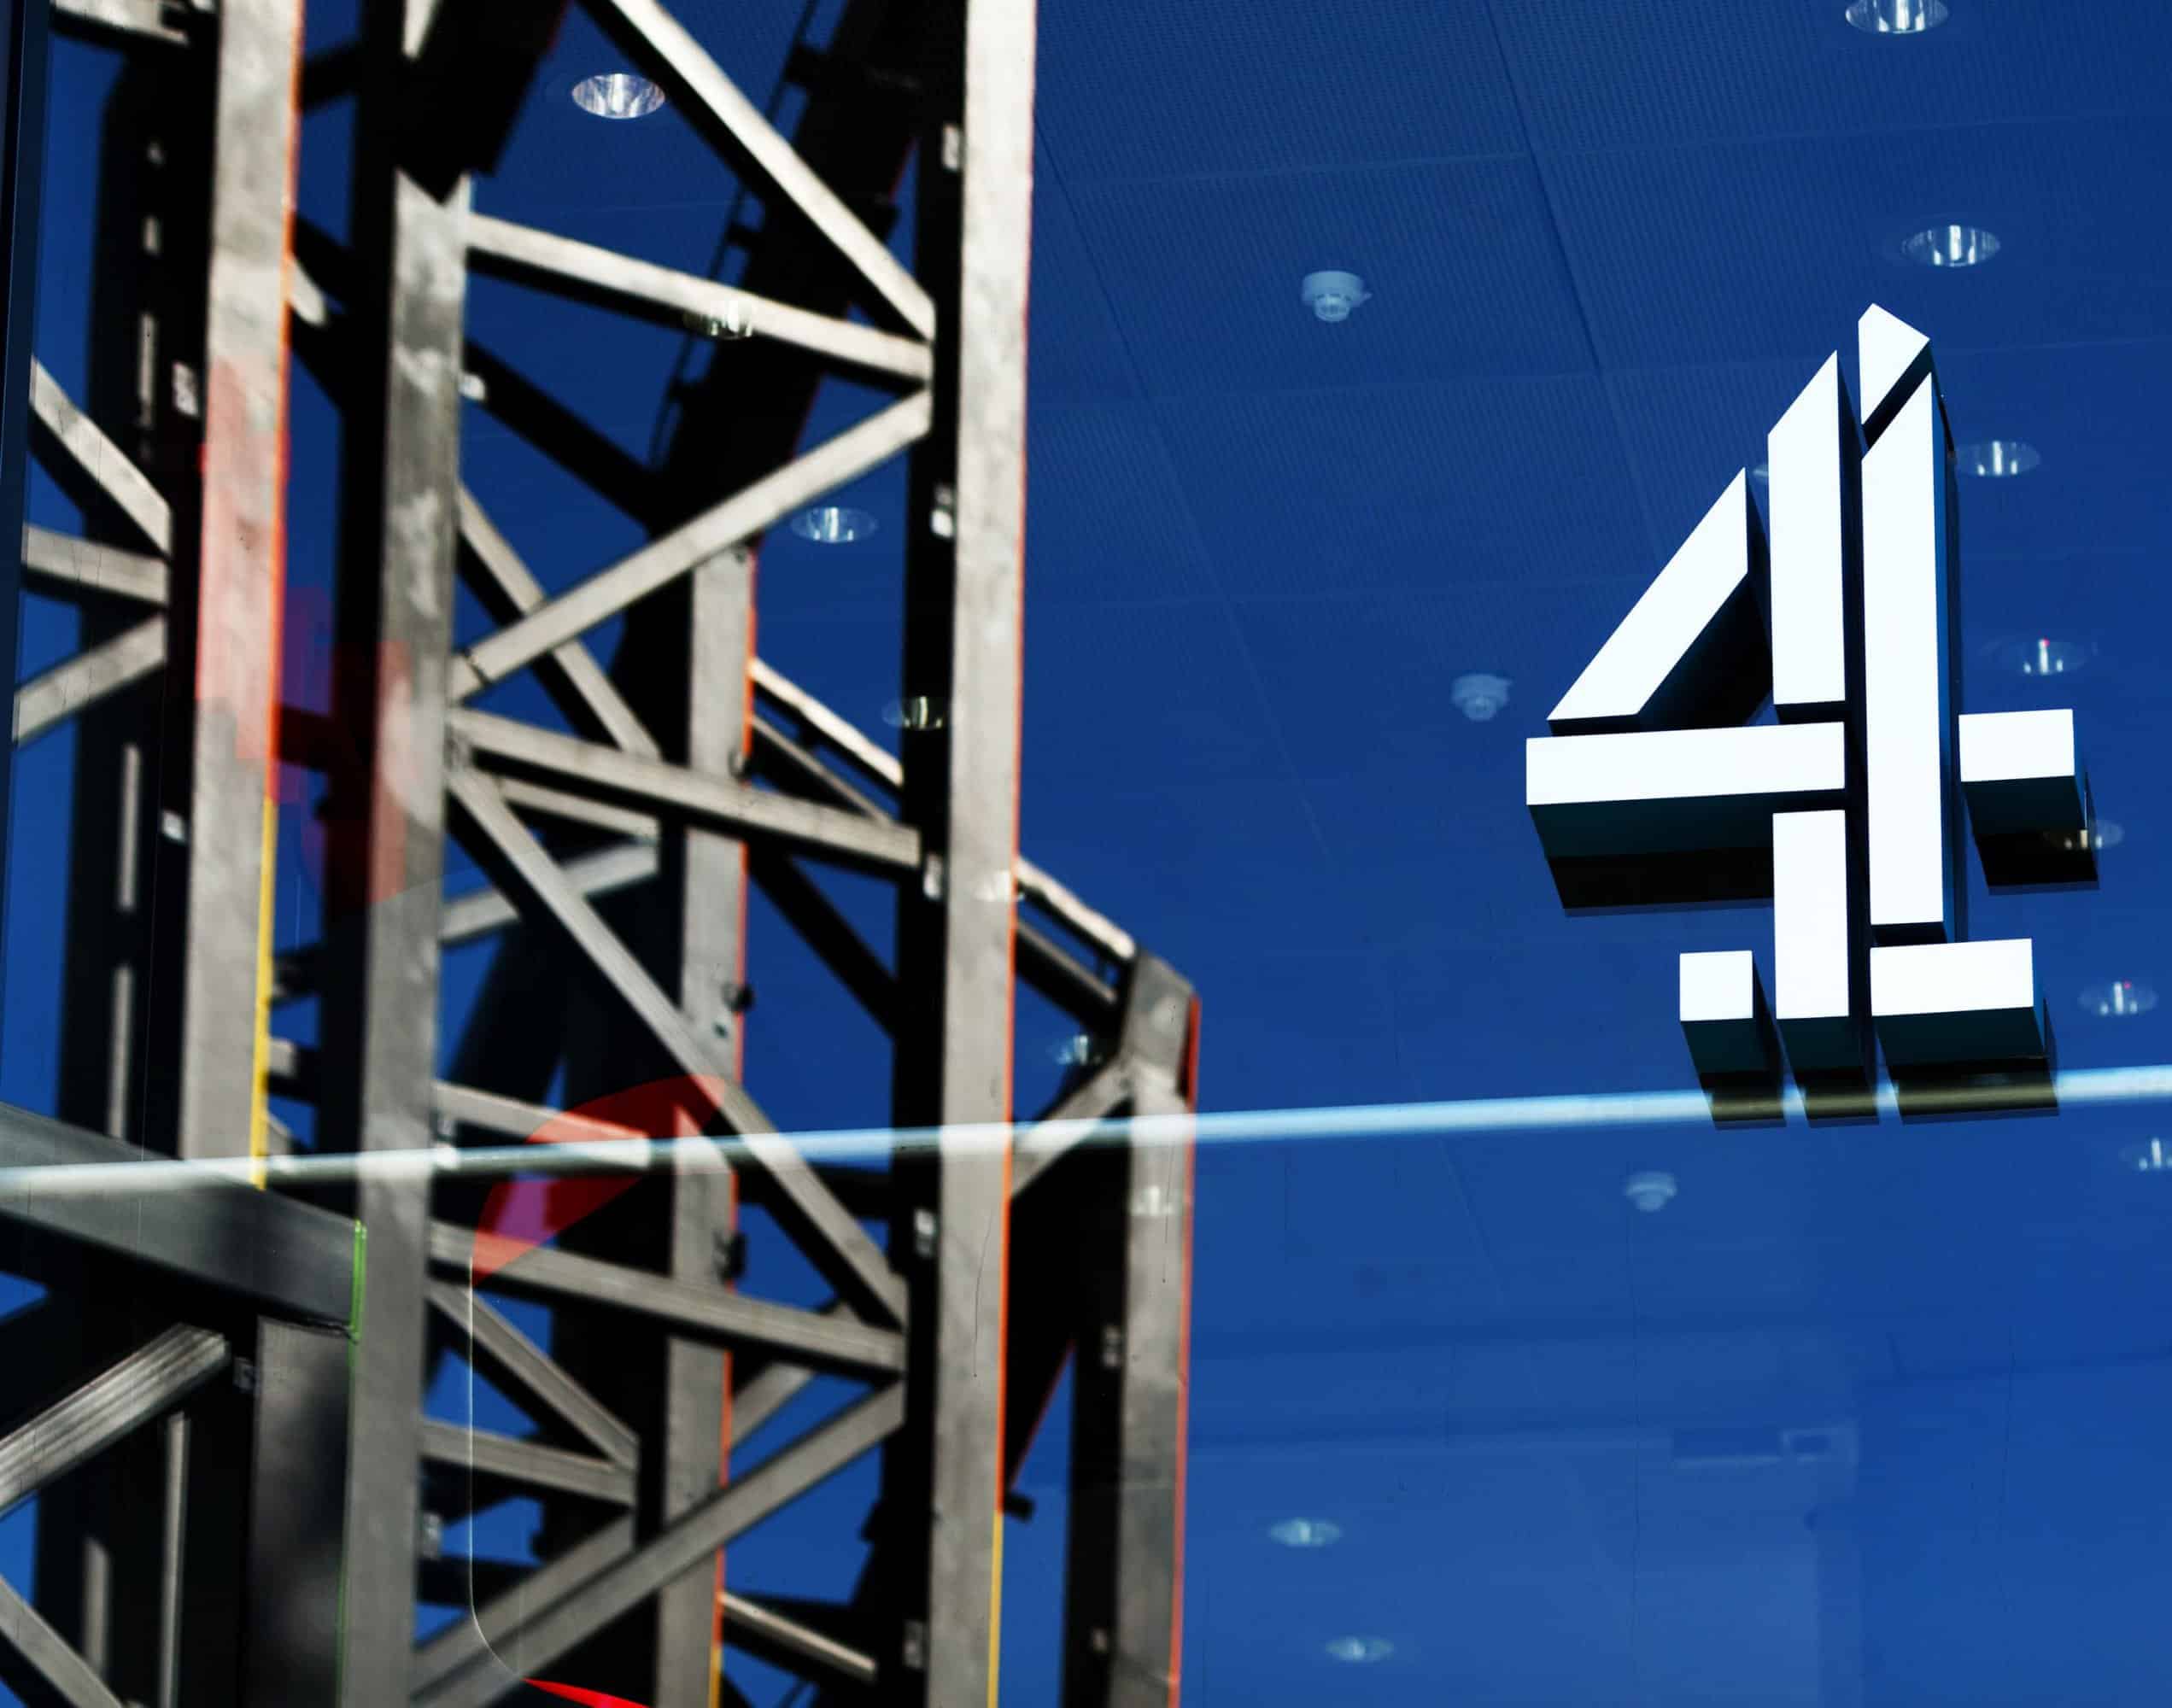 UK producers urge new PM to reconsider ‘devastating’ Channel 4 privatisation